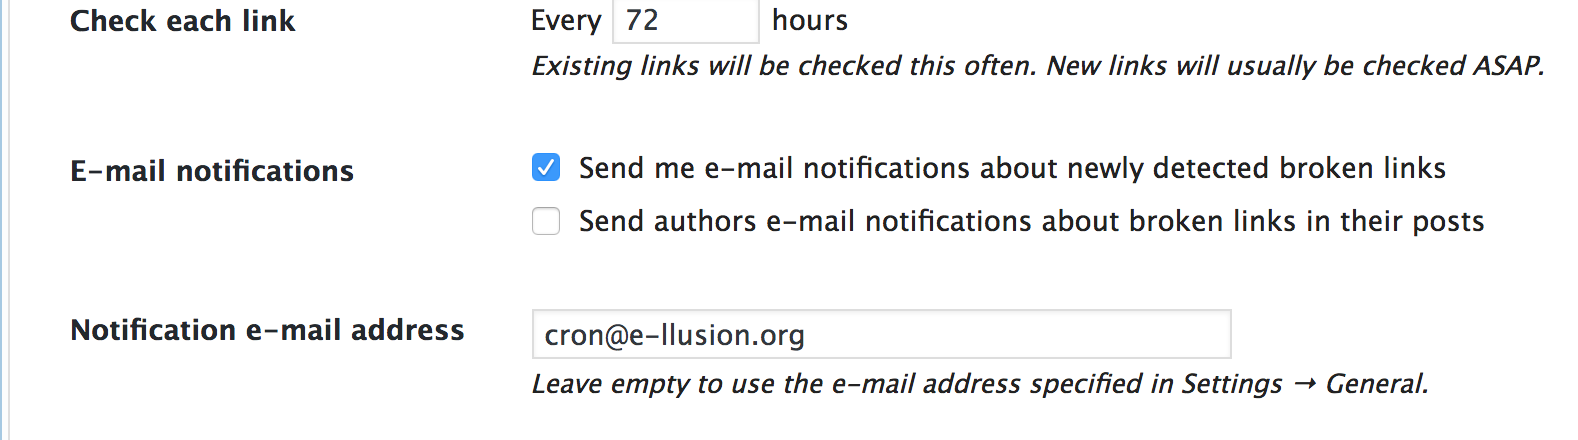 Plugin email address